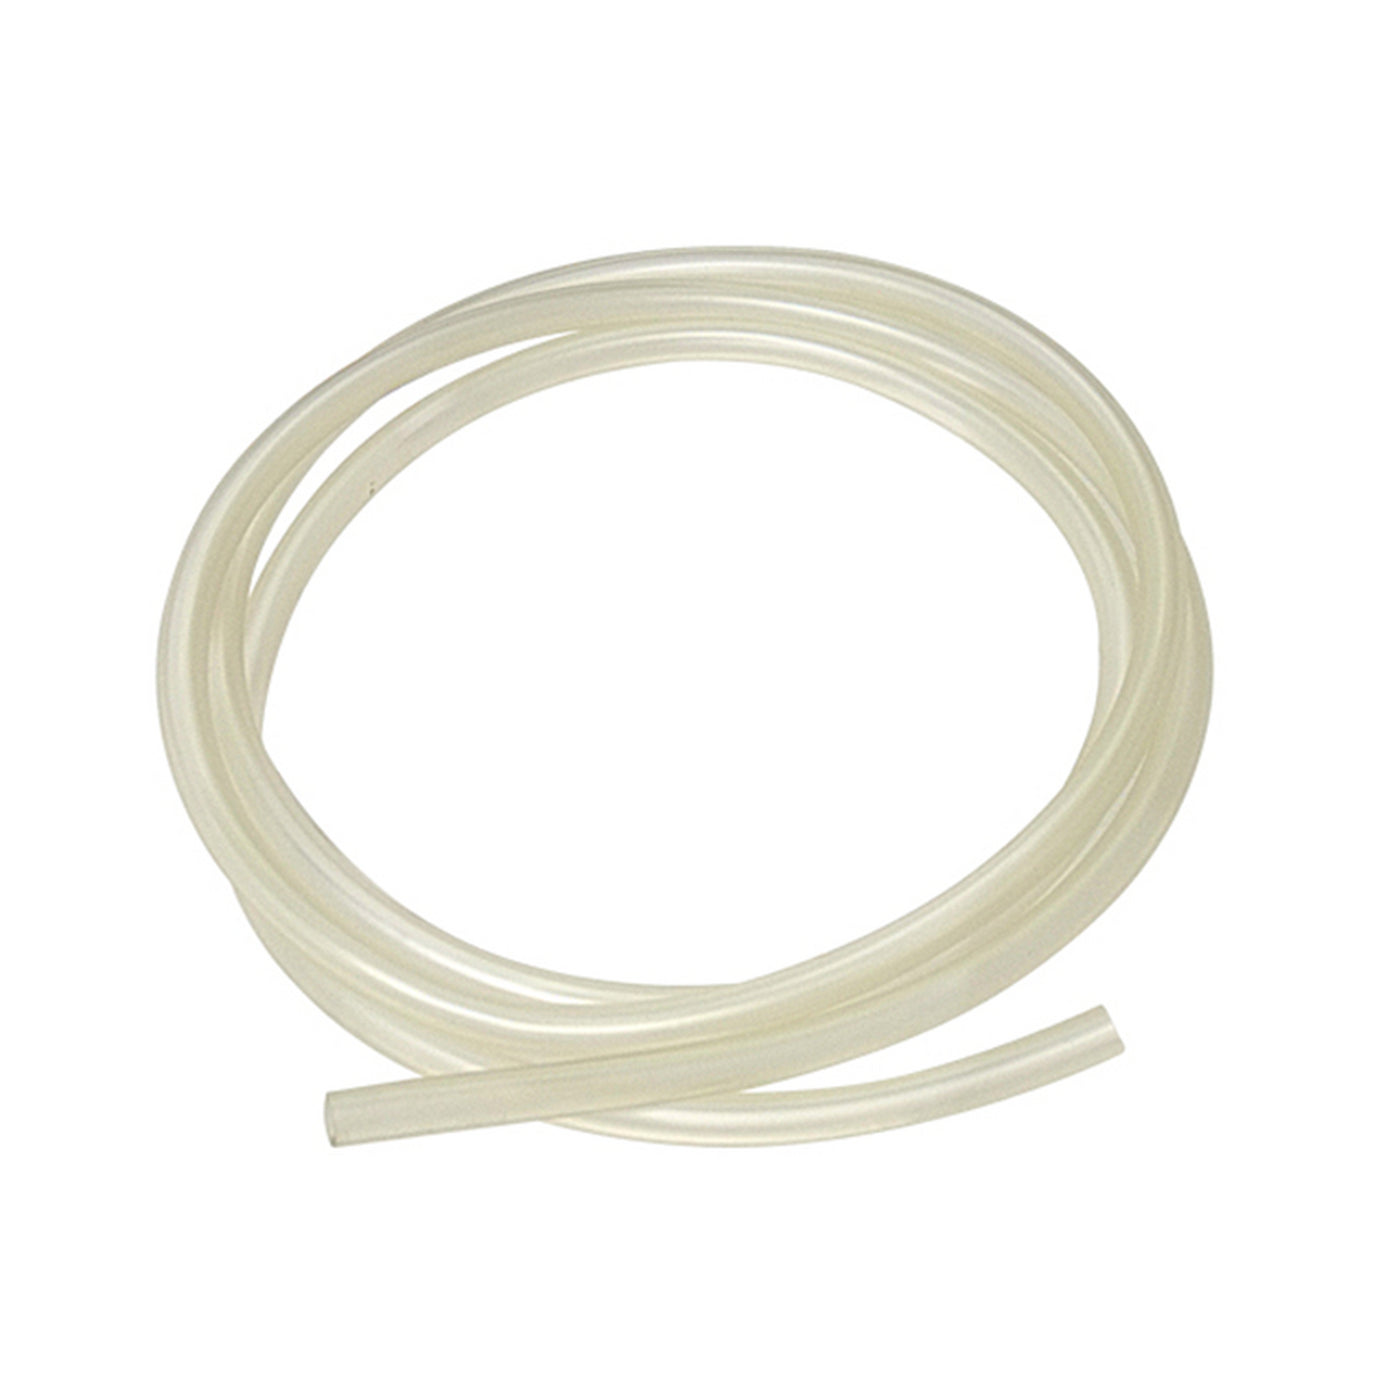 CLEAR PVC FUEL LINE 7/32" ID 50' ROLL#mpn_UP-07008